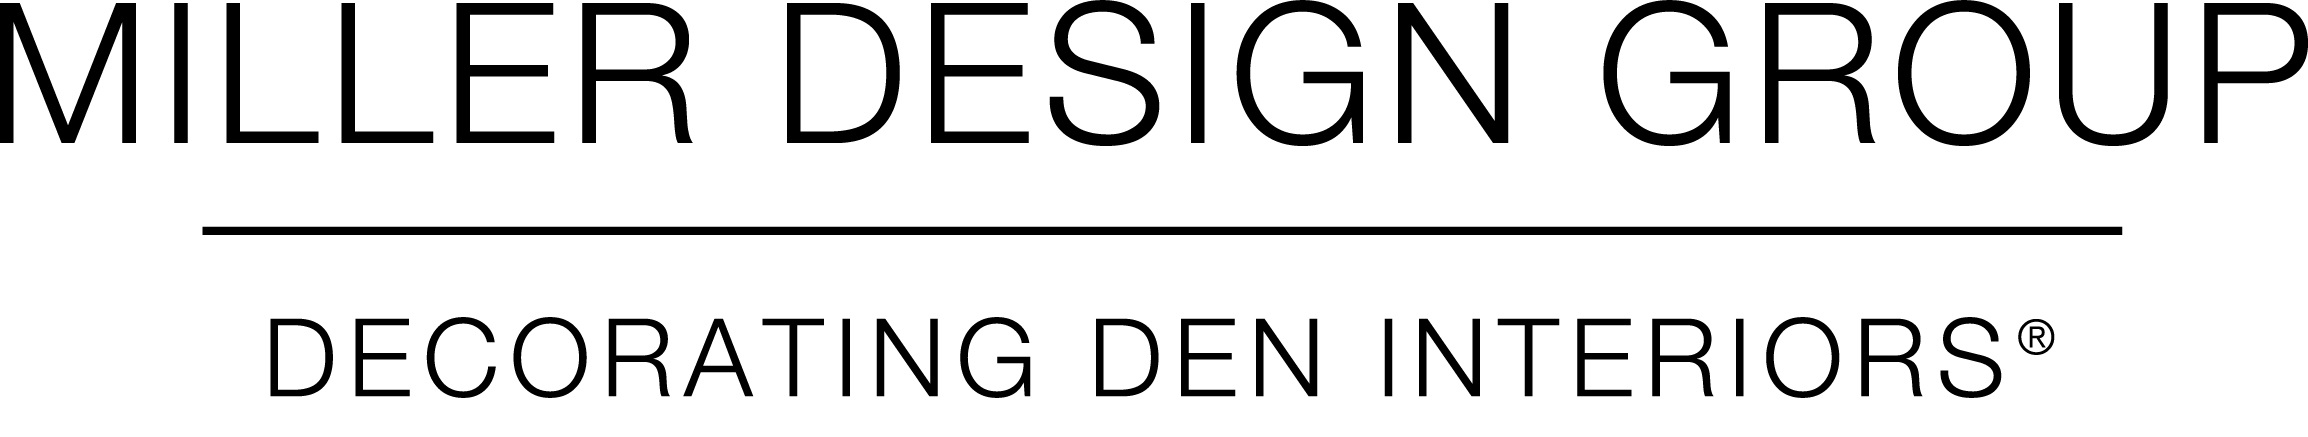 Miller Design Group - Decorating Den Interiors